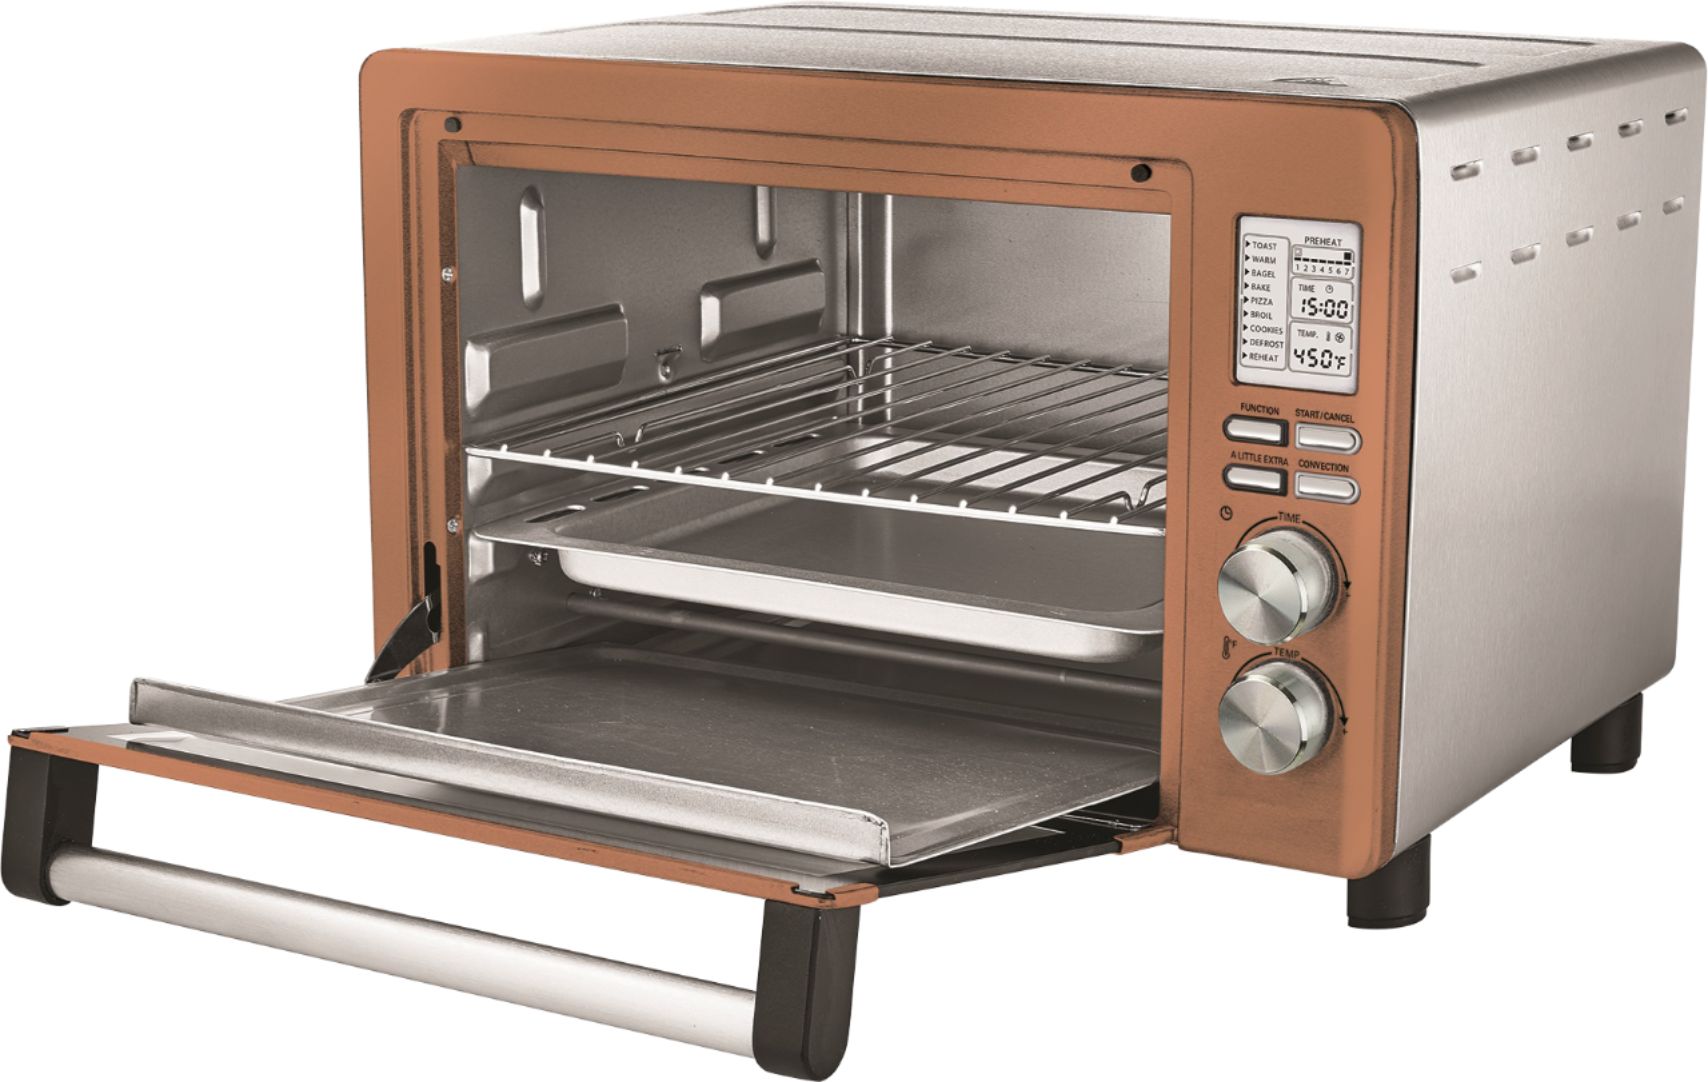 Farberware Digital 6-Slice Toaster Oven, Sunset Copper 